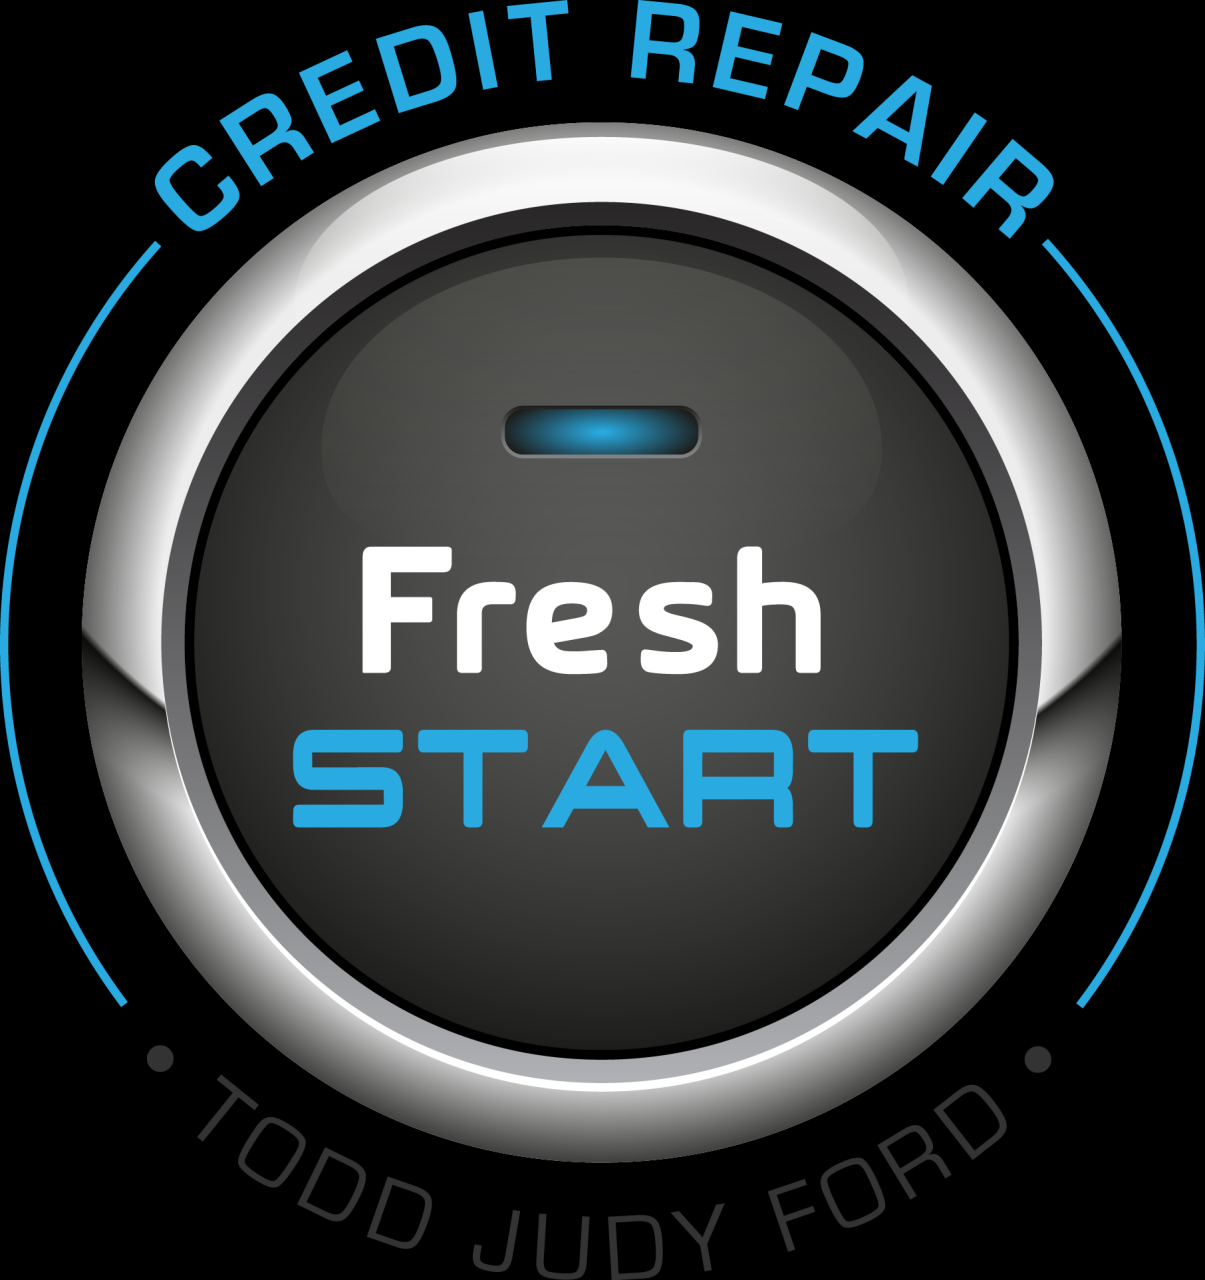 Todd Judy Ford Fresh Start Rebuild My Credit WV Ford